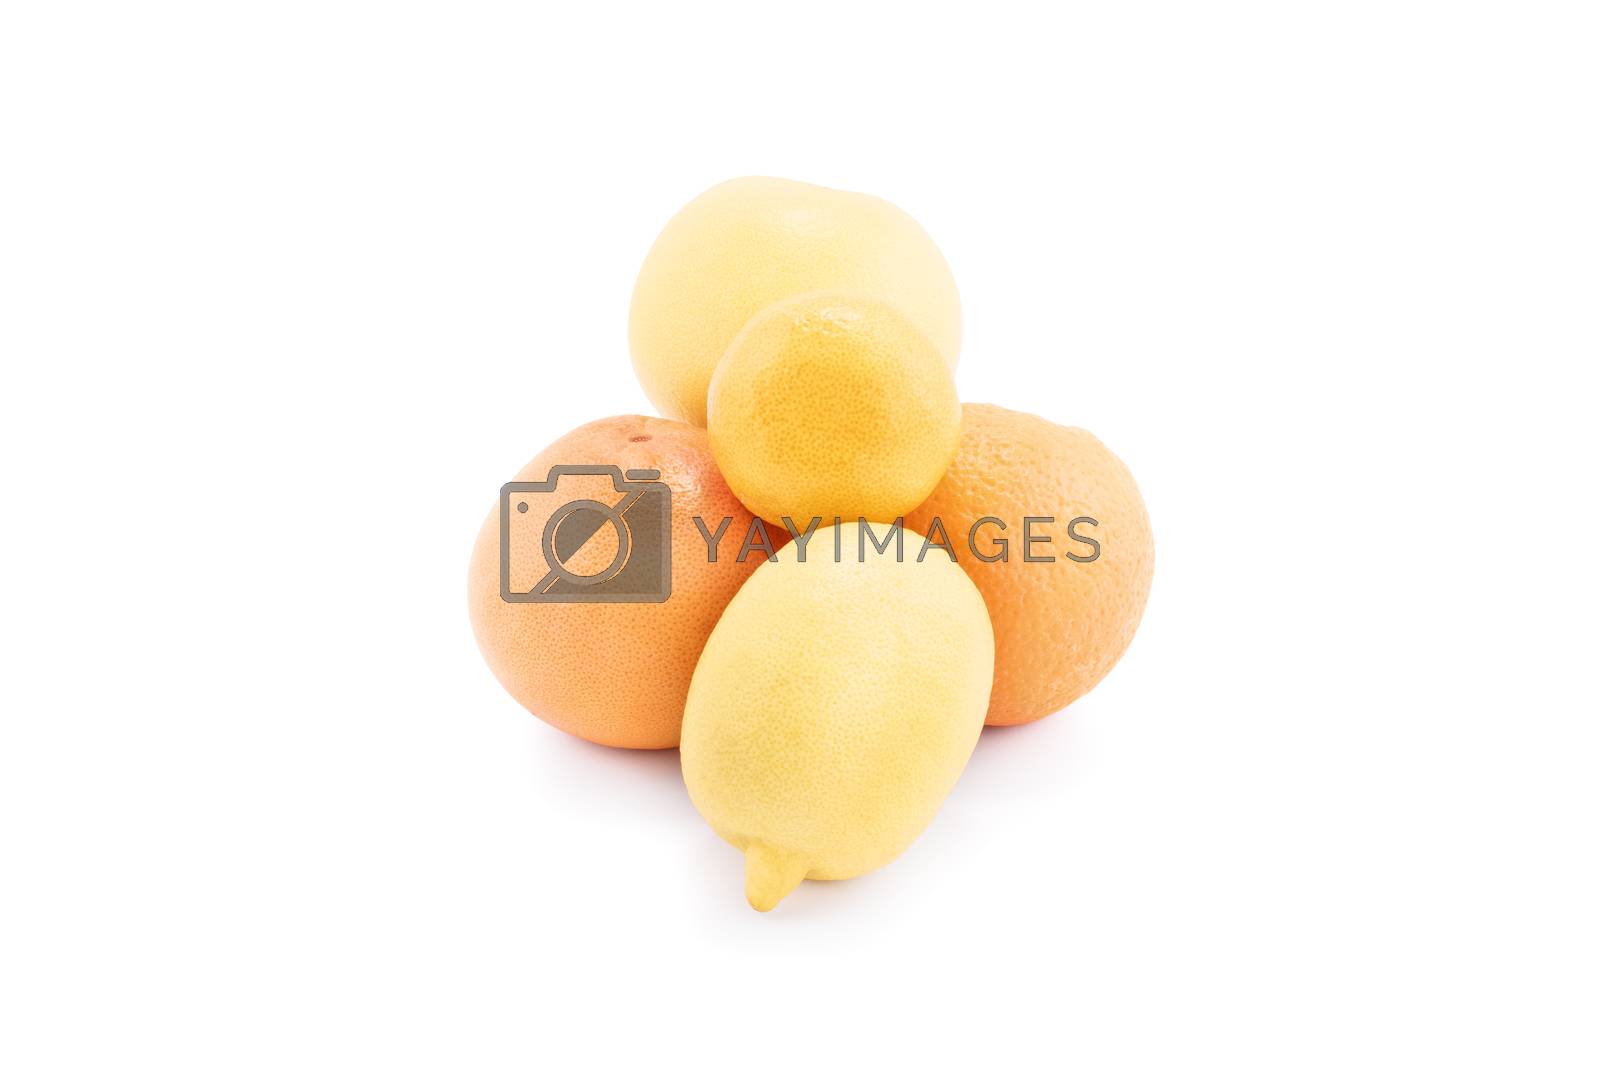 Royalty free image of Lemon, orange, citruses and tangerine by Mendelex